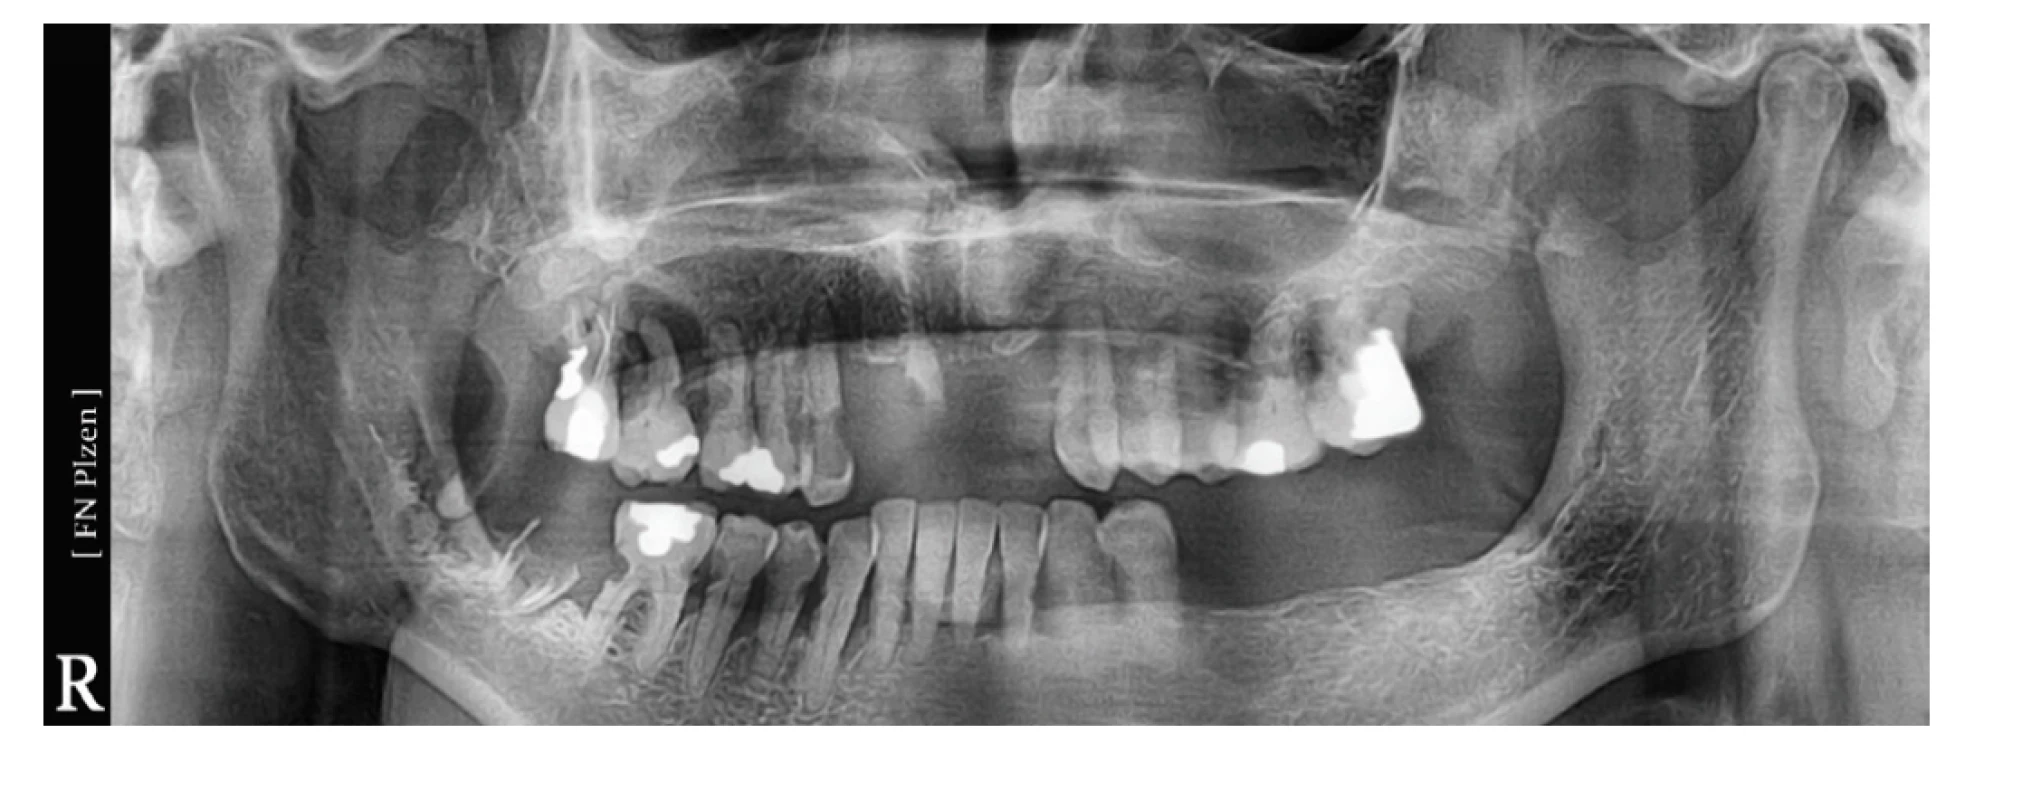 OPG pacienta, kde byly
indikovány všechny přítomné
zuby k extrakci<br>
Fig. 2
OPG of the patient, where all
teeth present were iniciated
for extraction